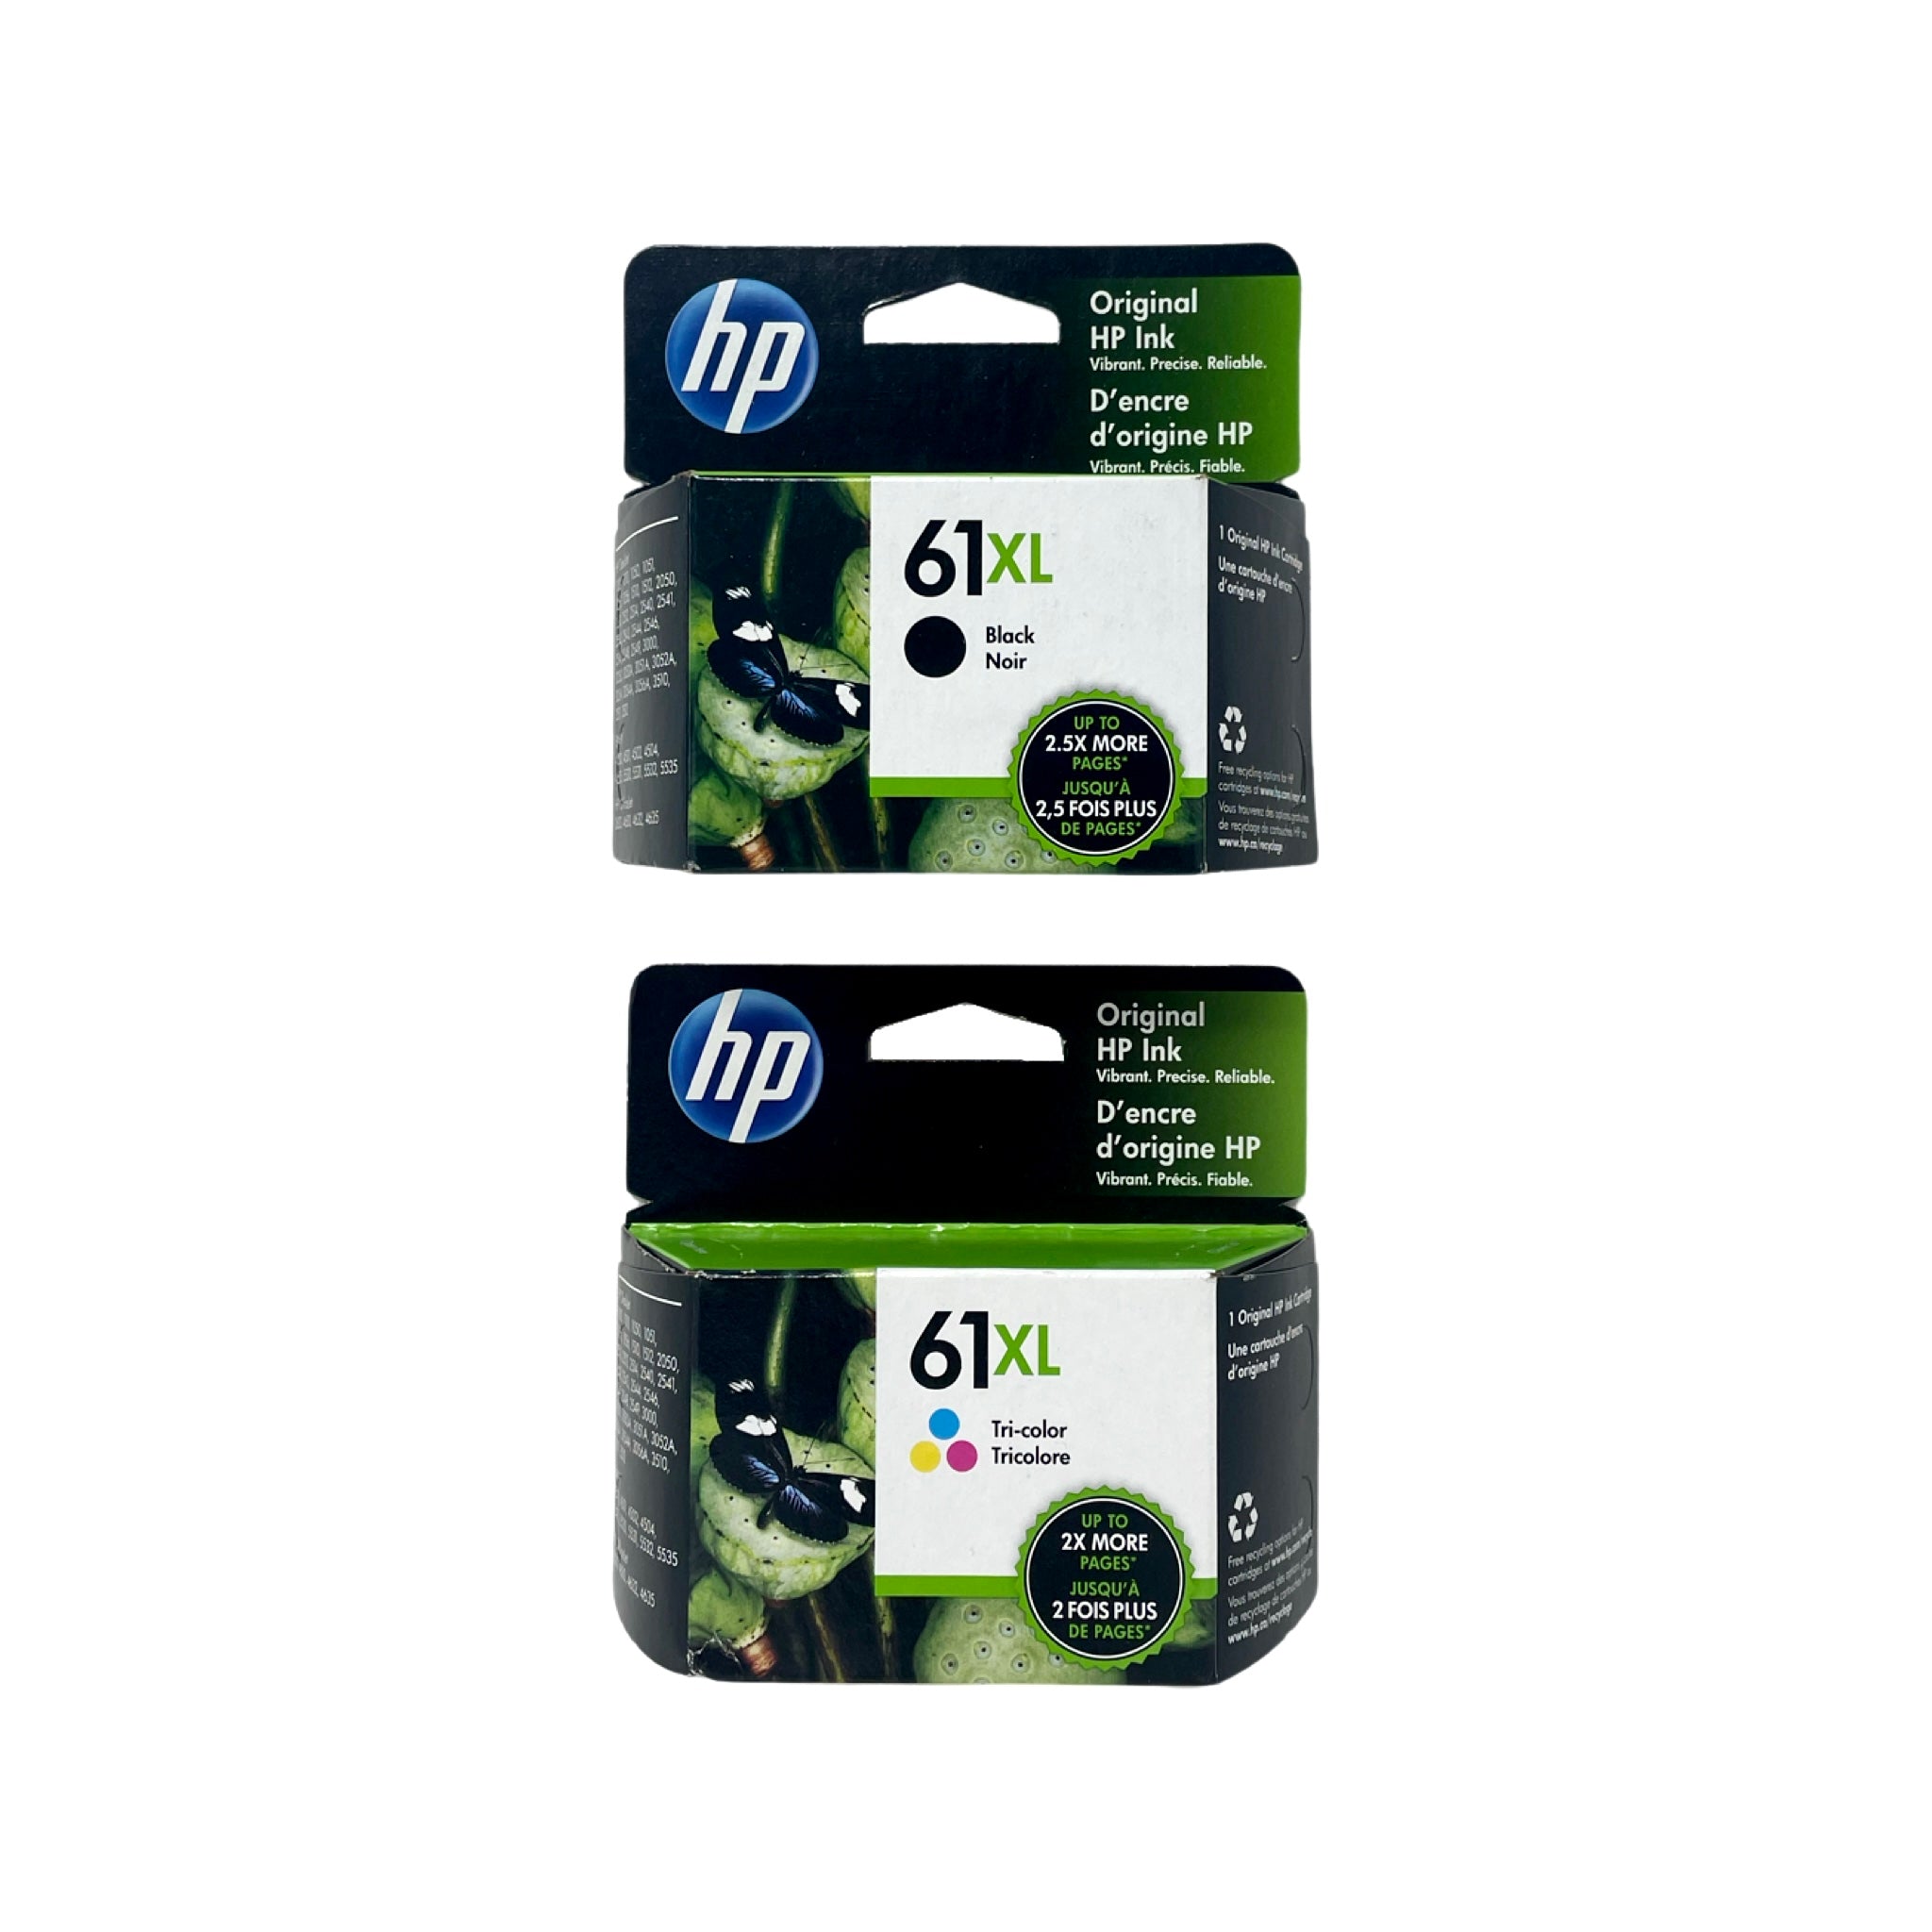 Genuine HP 61XL Black and Color Inkjet Cartridges, 2-Pack